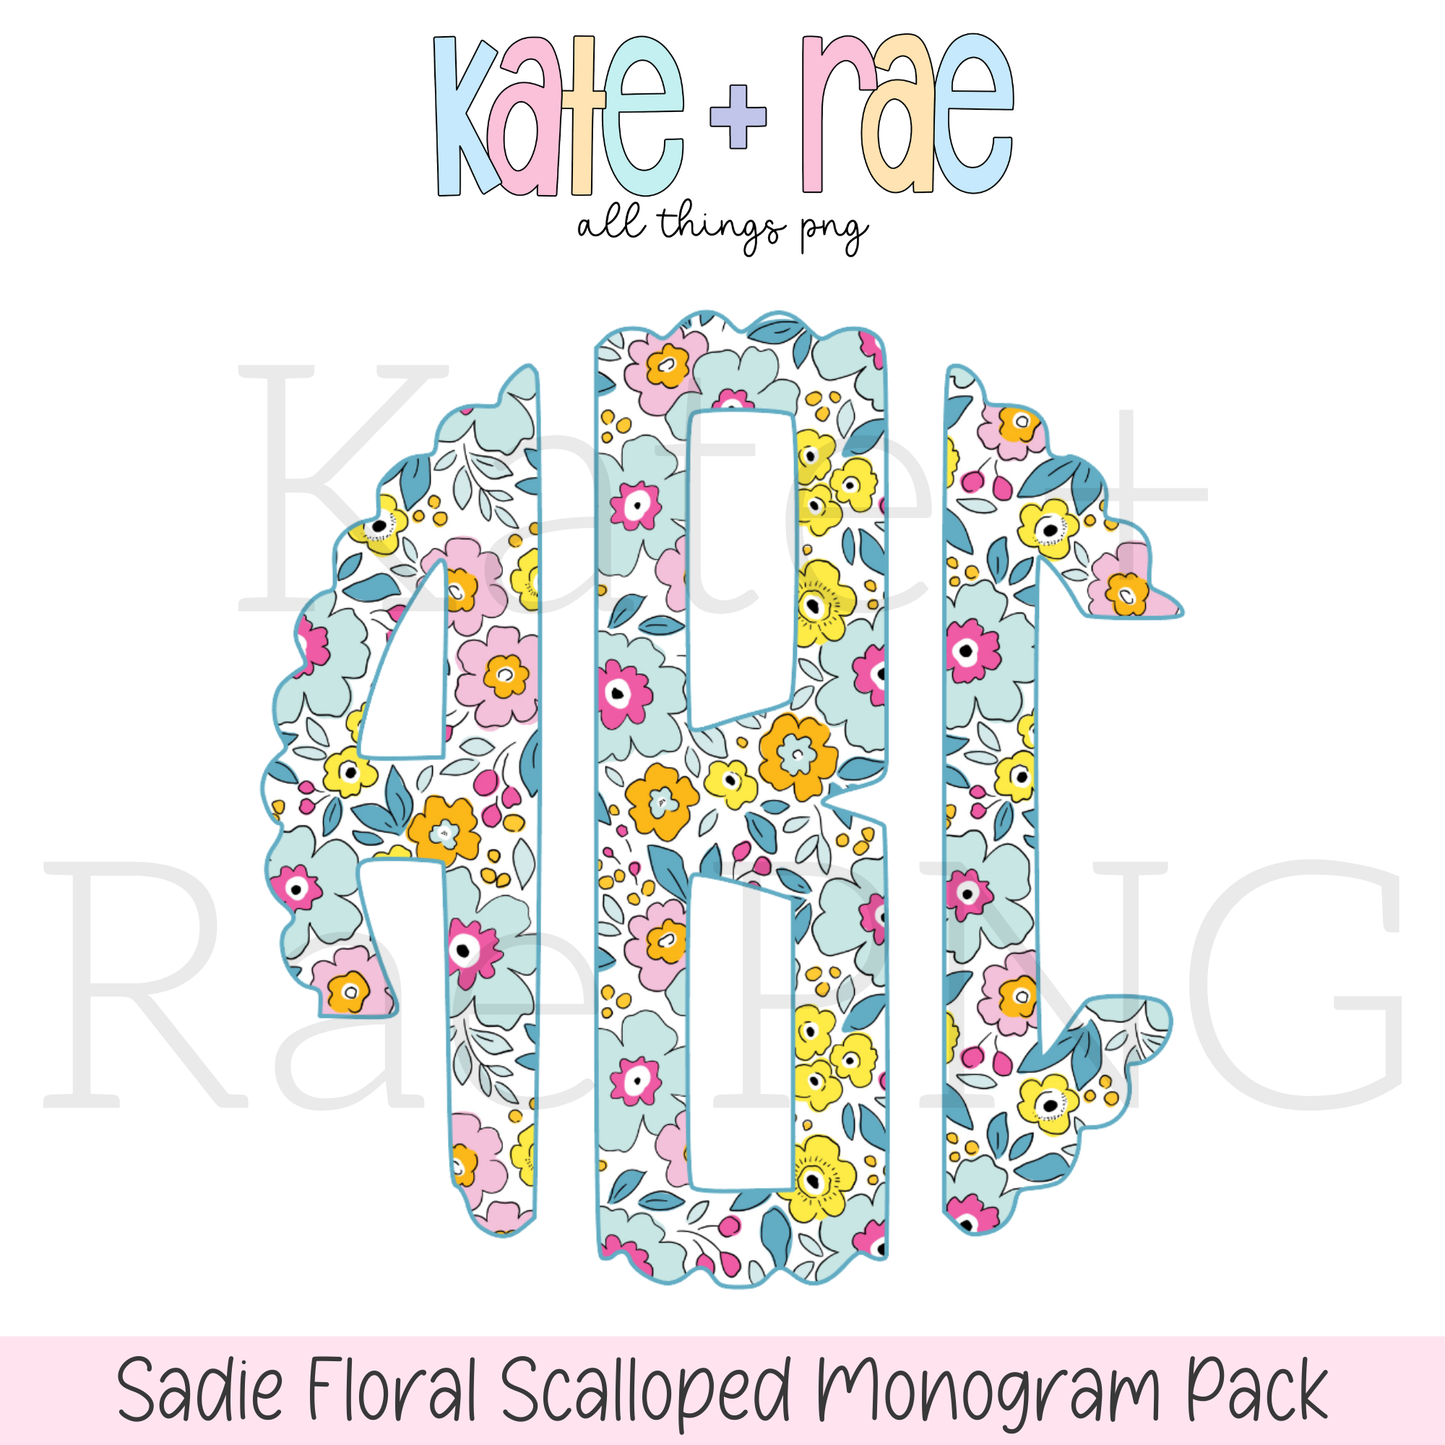 Sadie Floral Scalloped Monogram Pack